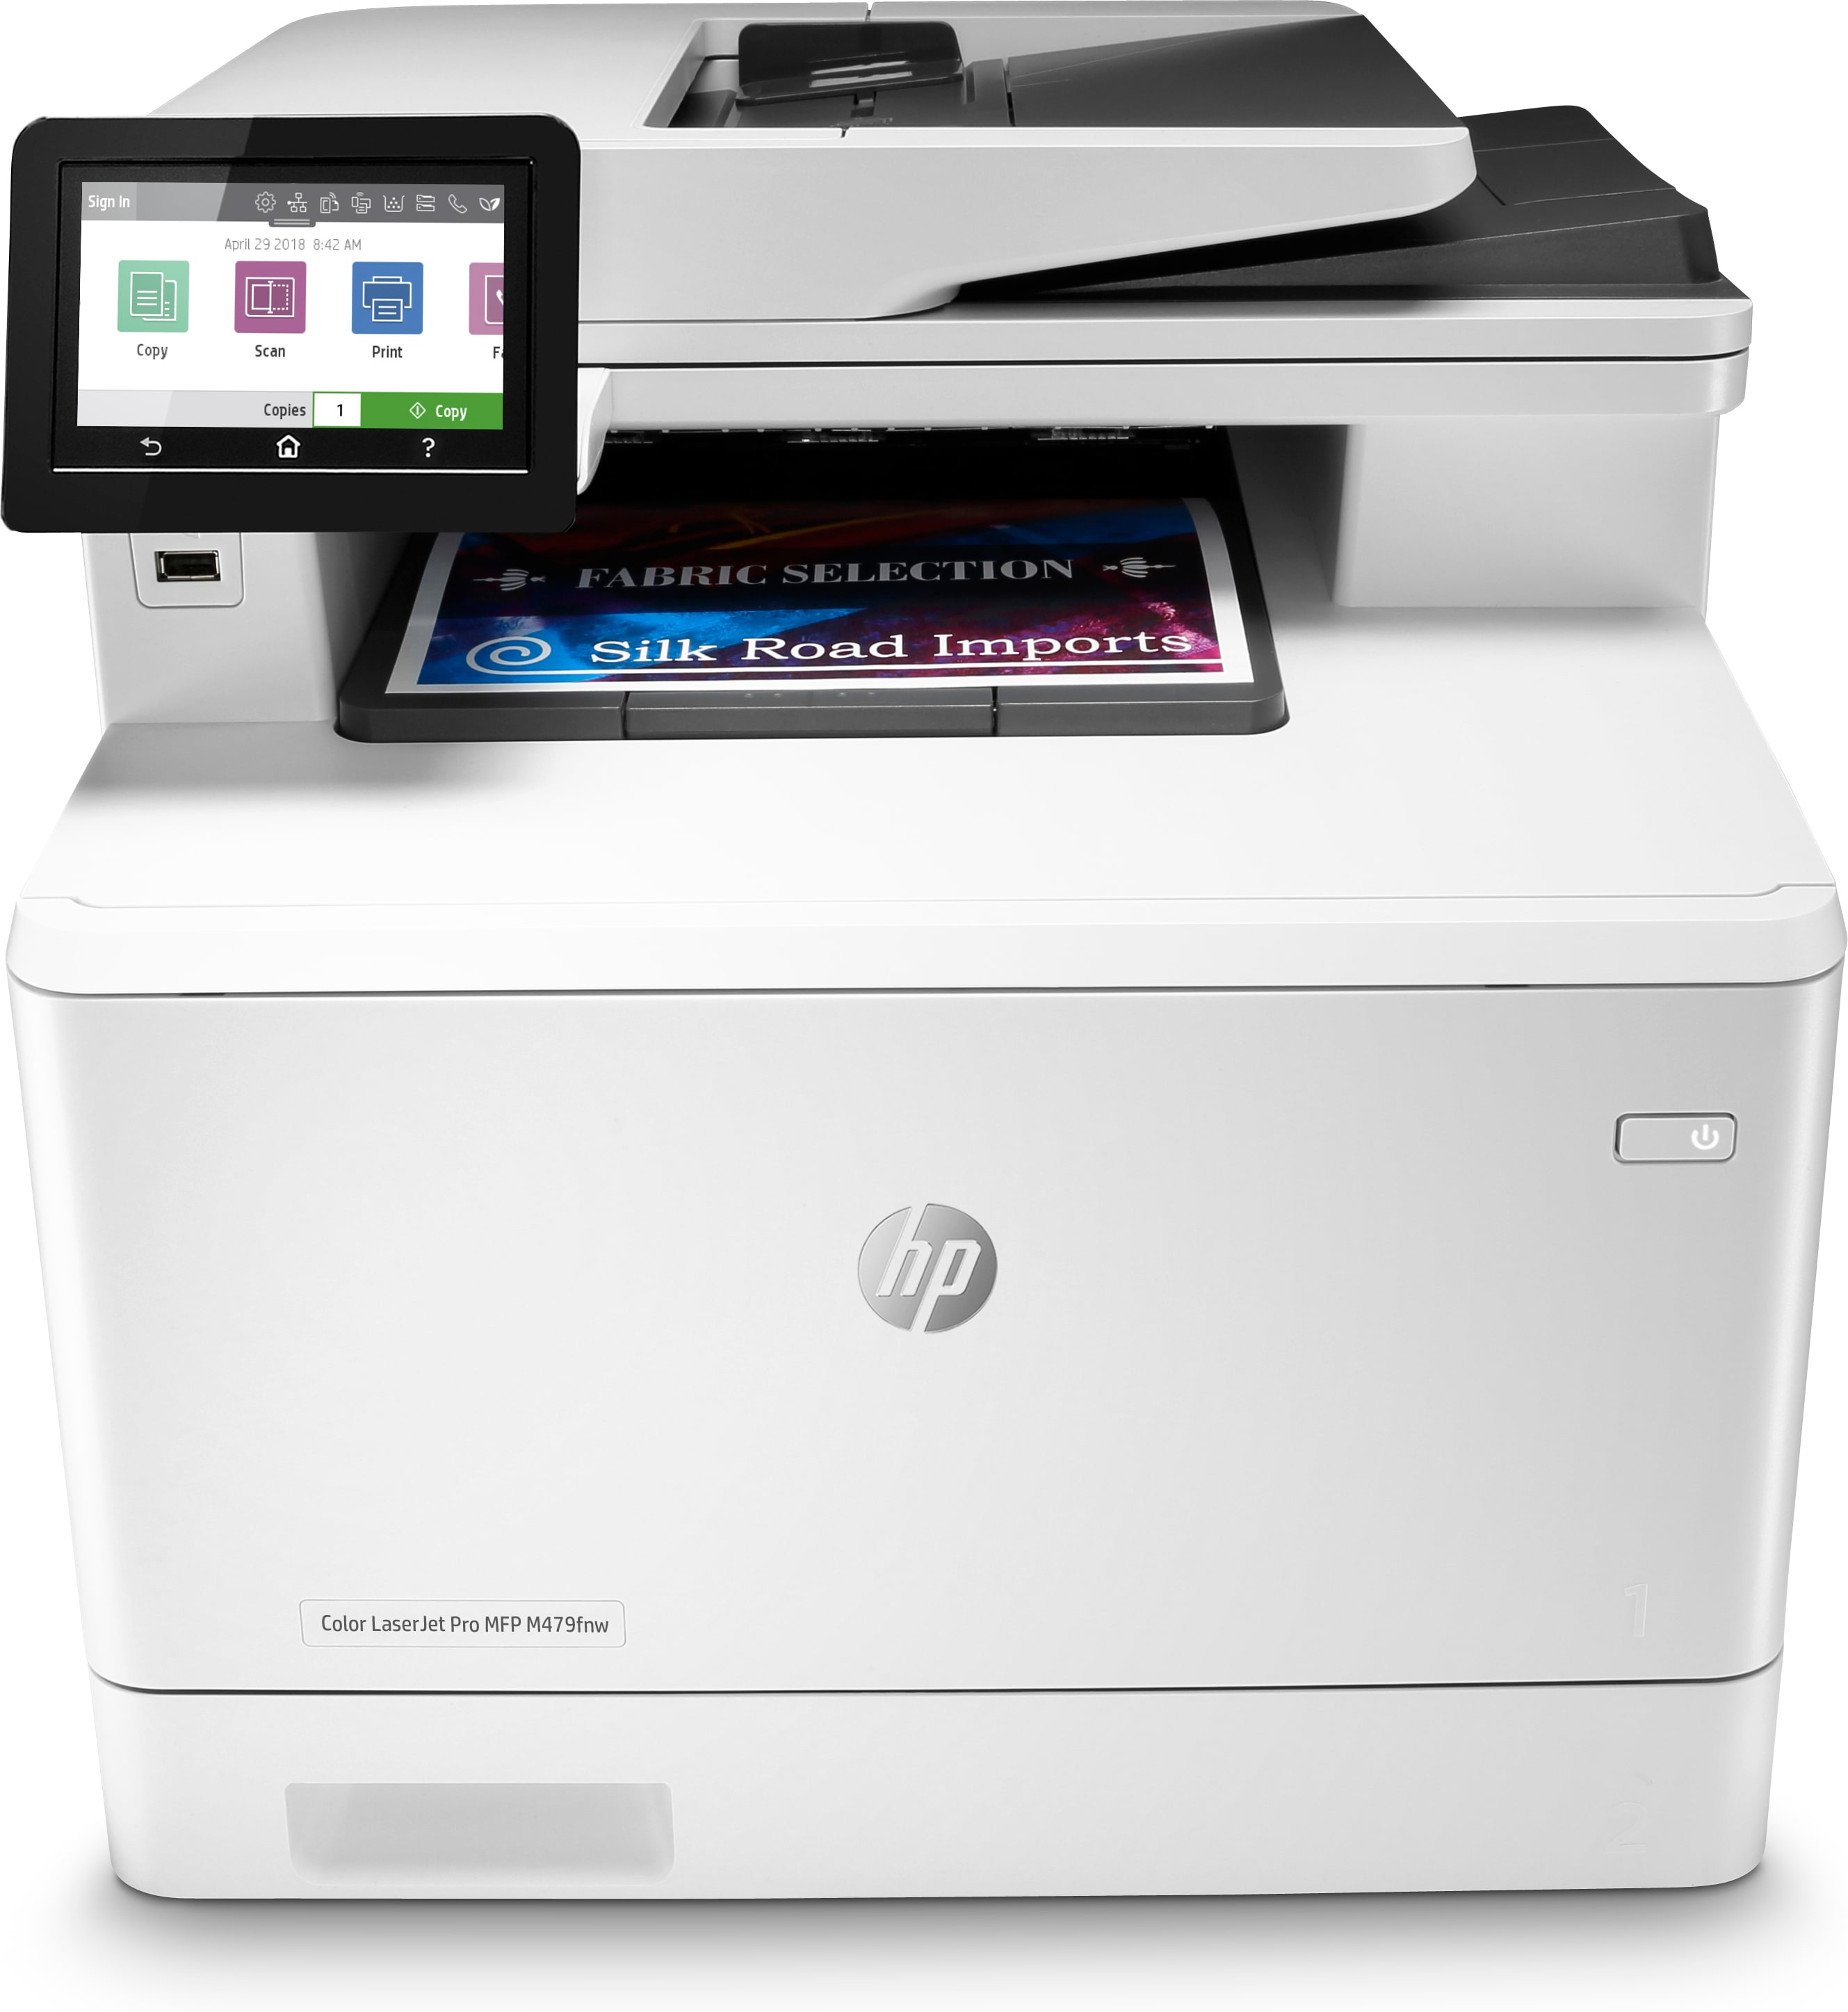 Impresora Color Hp laserjet pro m479fnw wifi copia escanea fax 27 ppm 600 a4